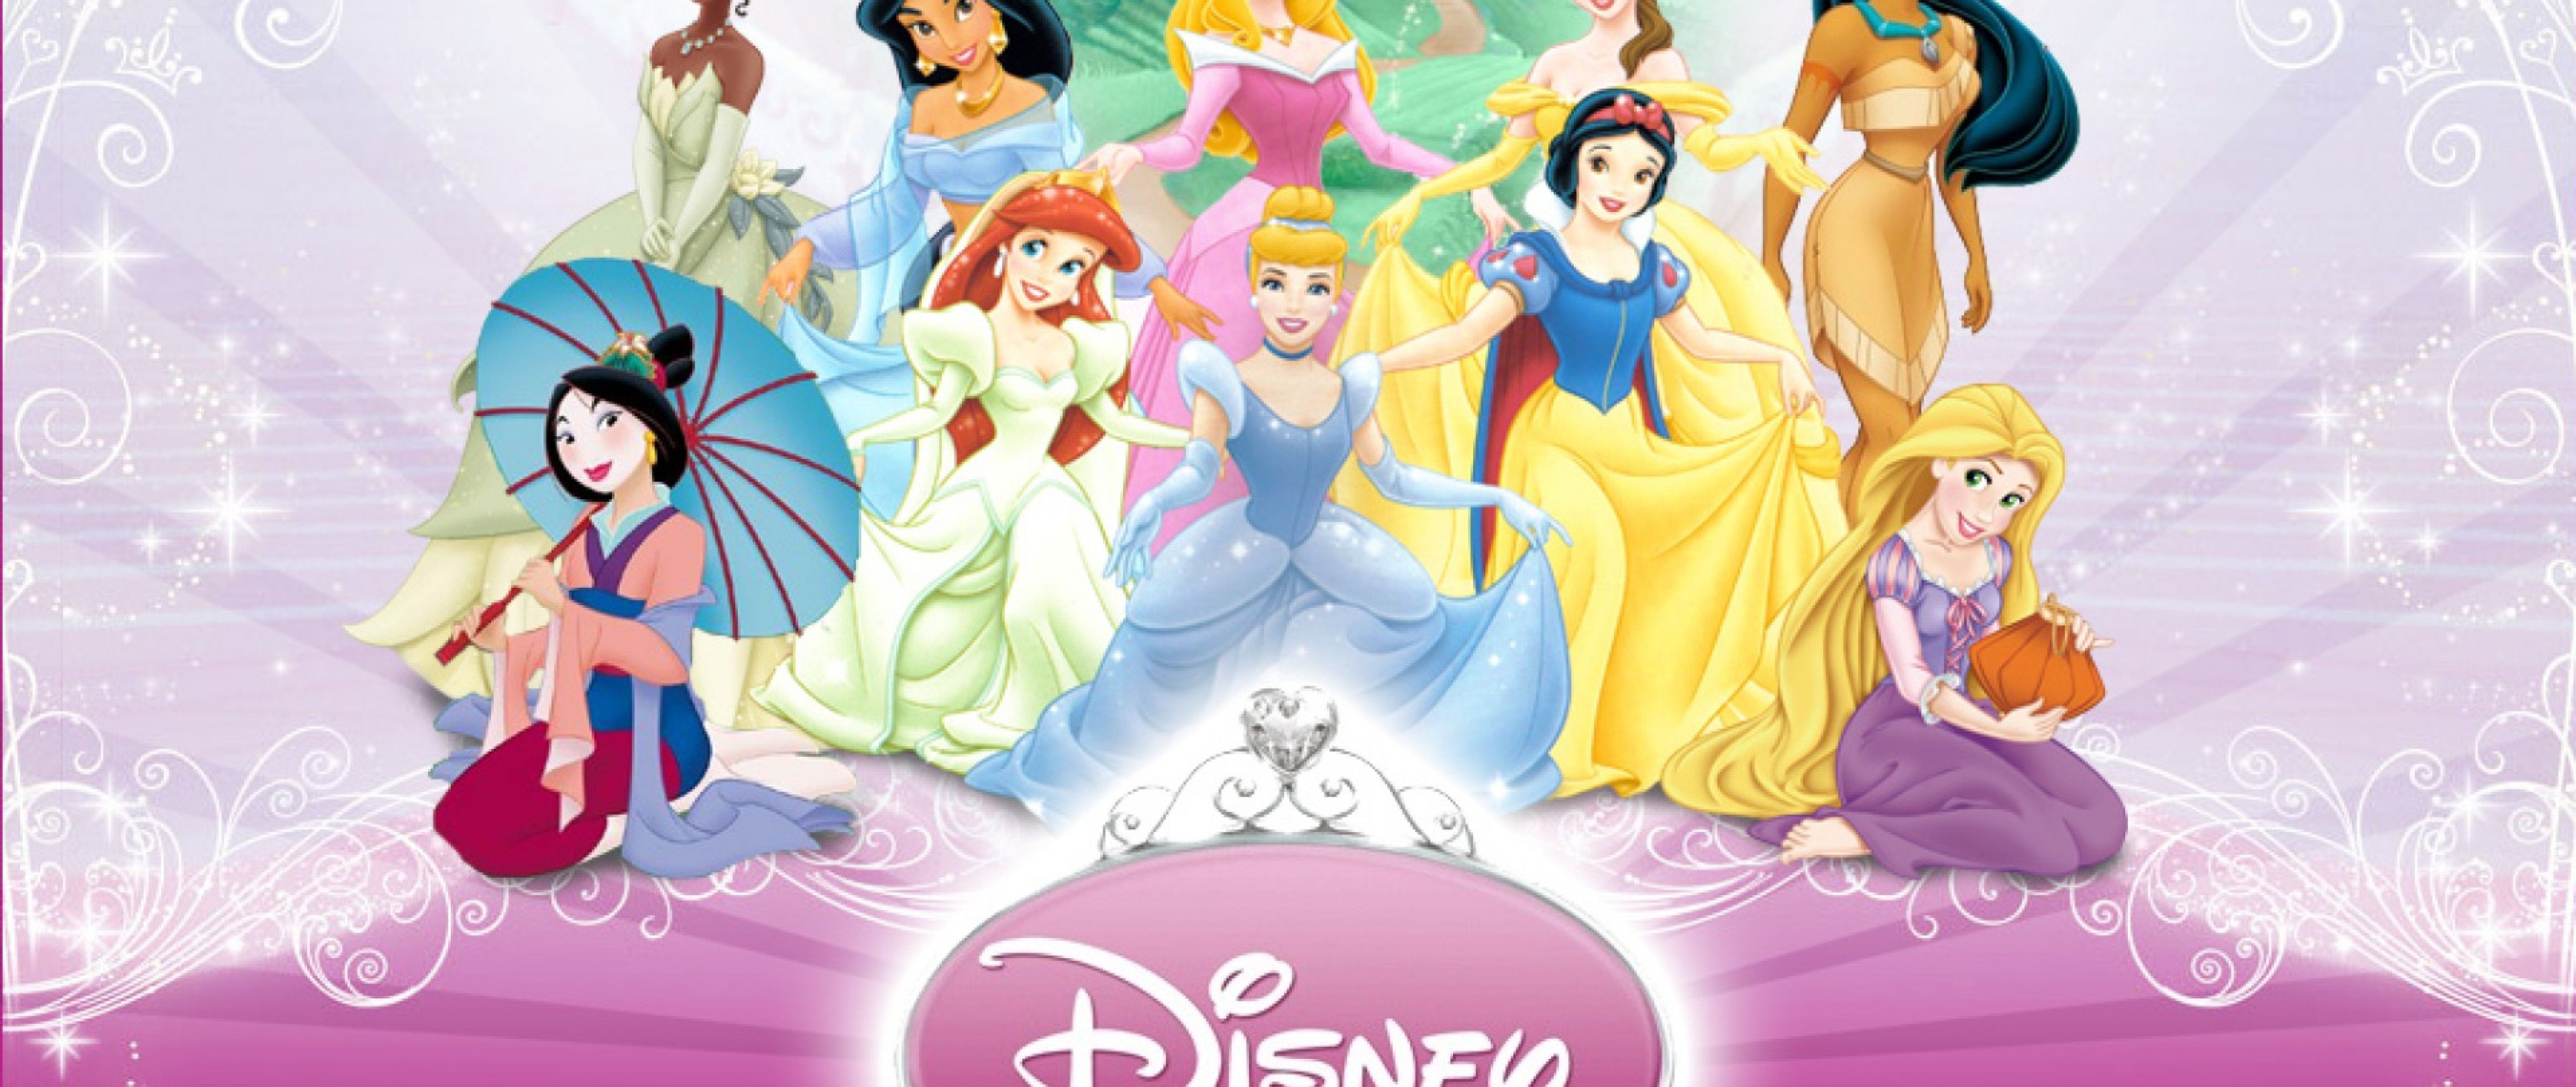 Disney Princesses HD Wallpaper 4K Ultra HD Wide TV